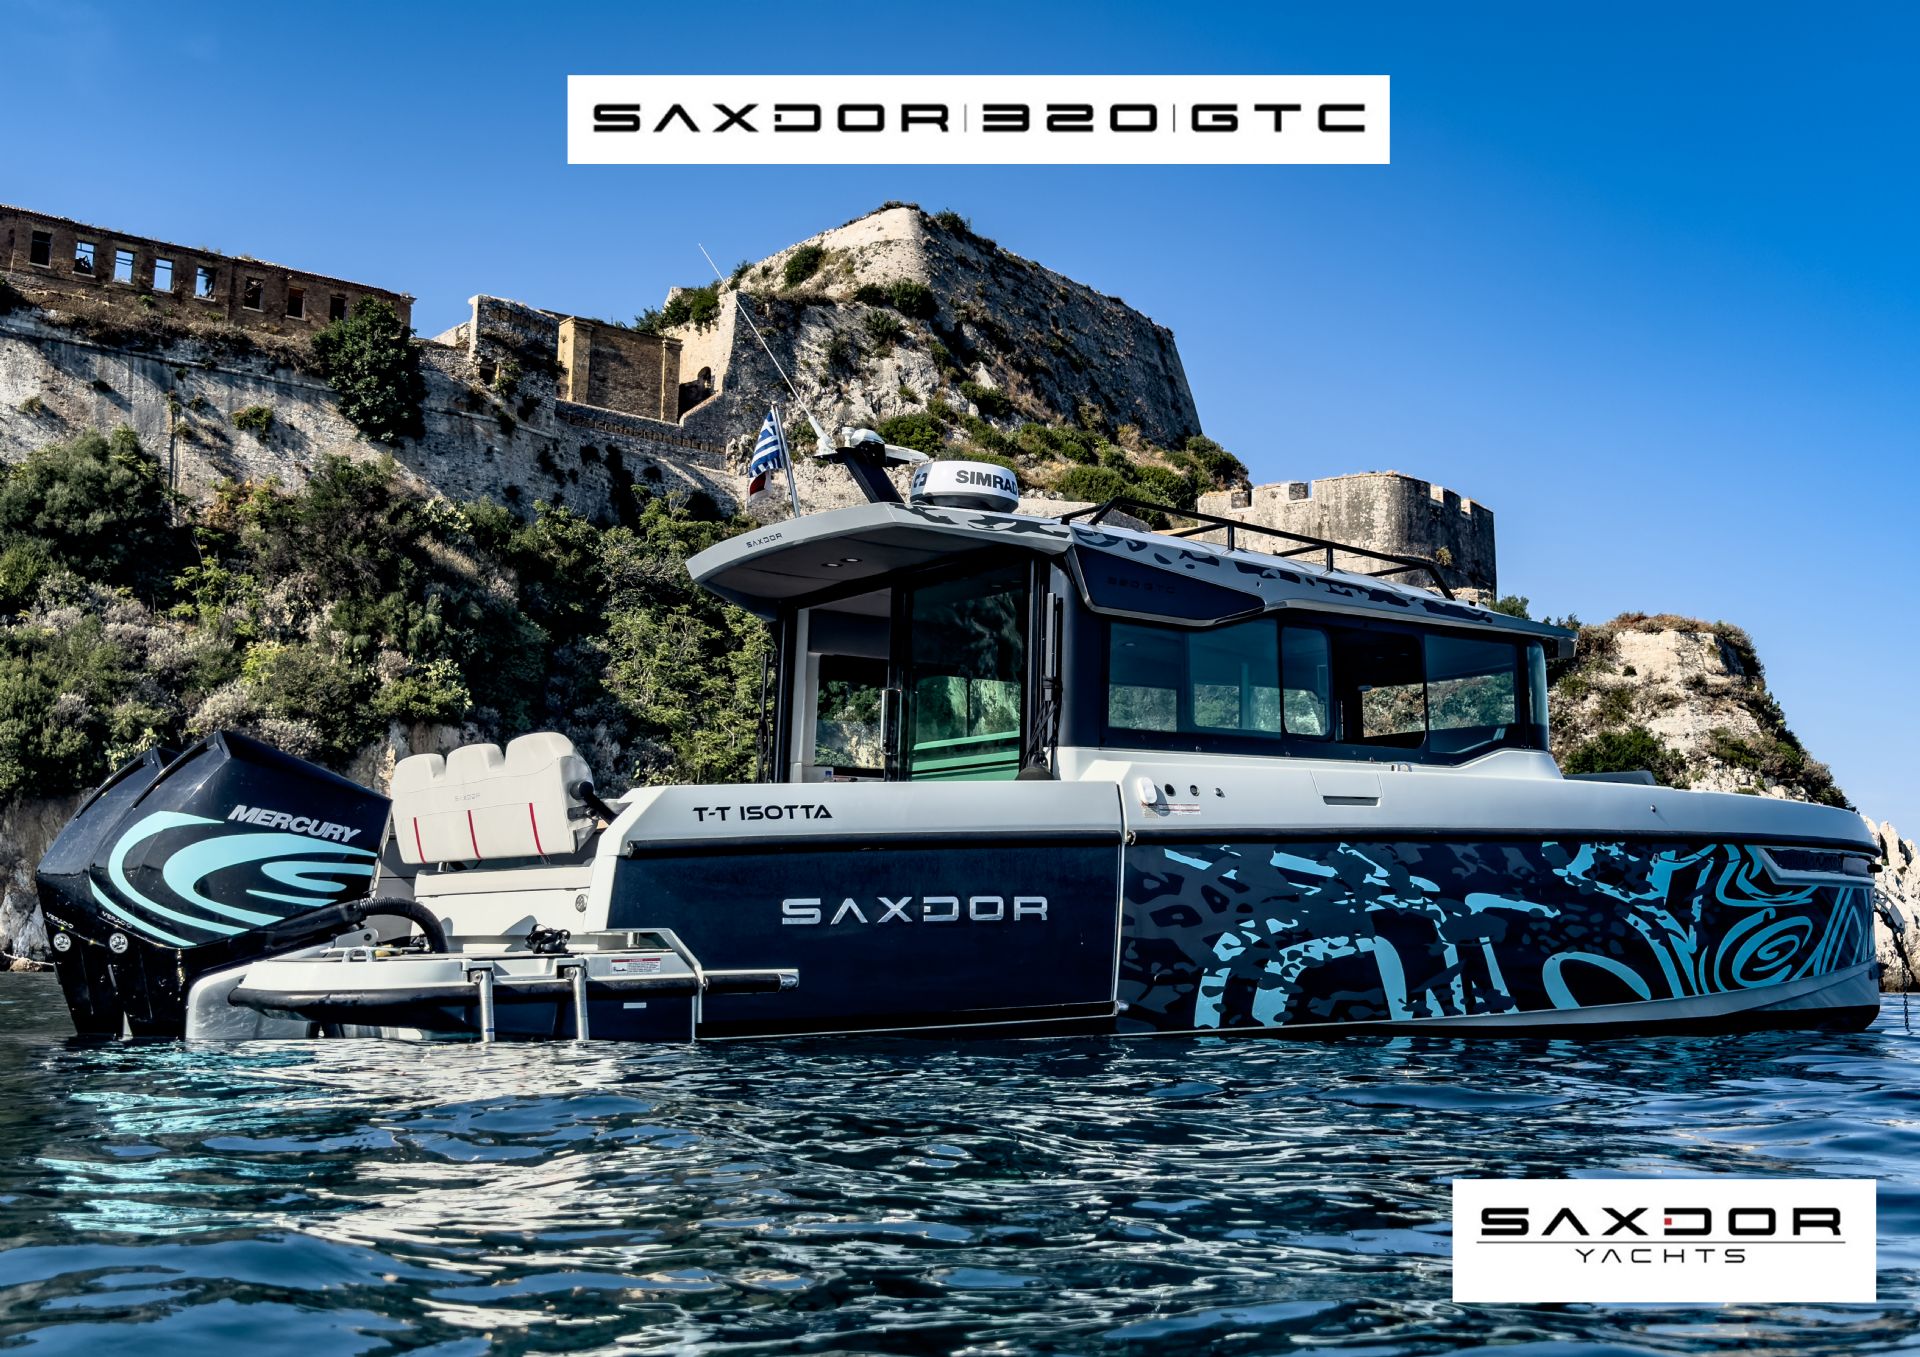 Saxdor 320 GTC - 2022